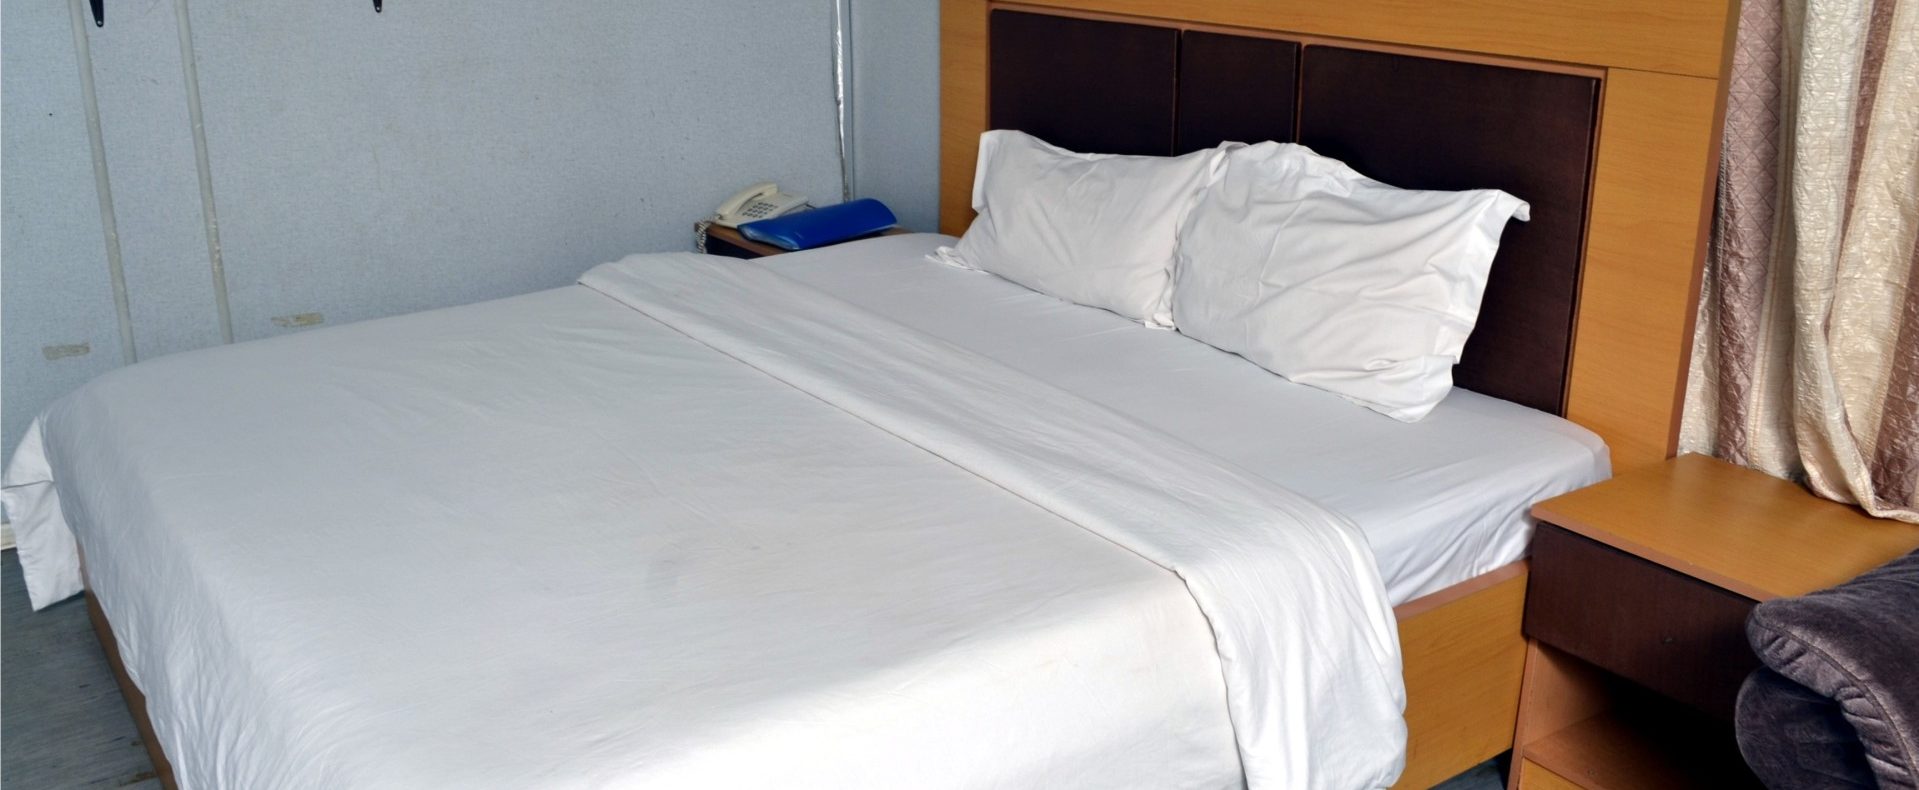 Hotel World Traveler I Room Type In Abuja Fct Nigeria